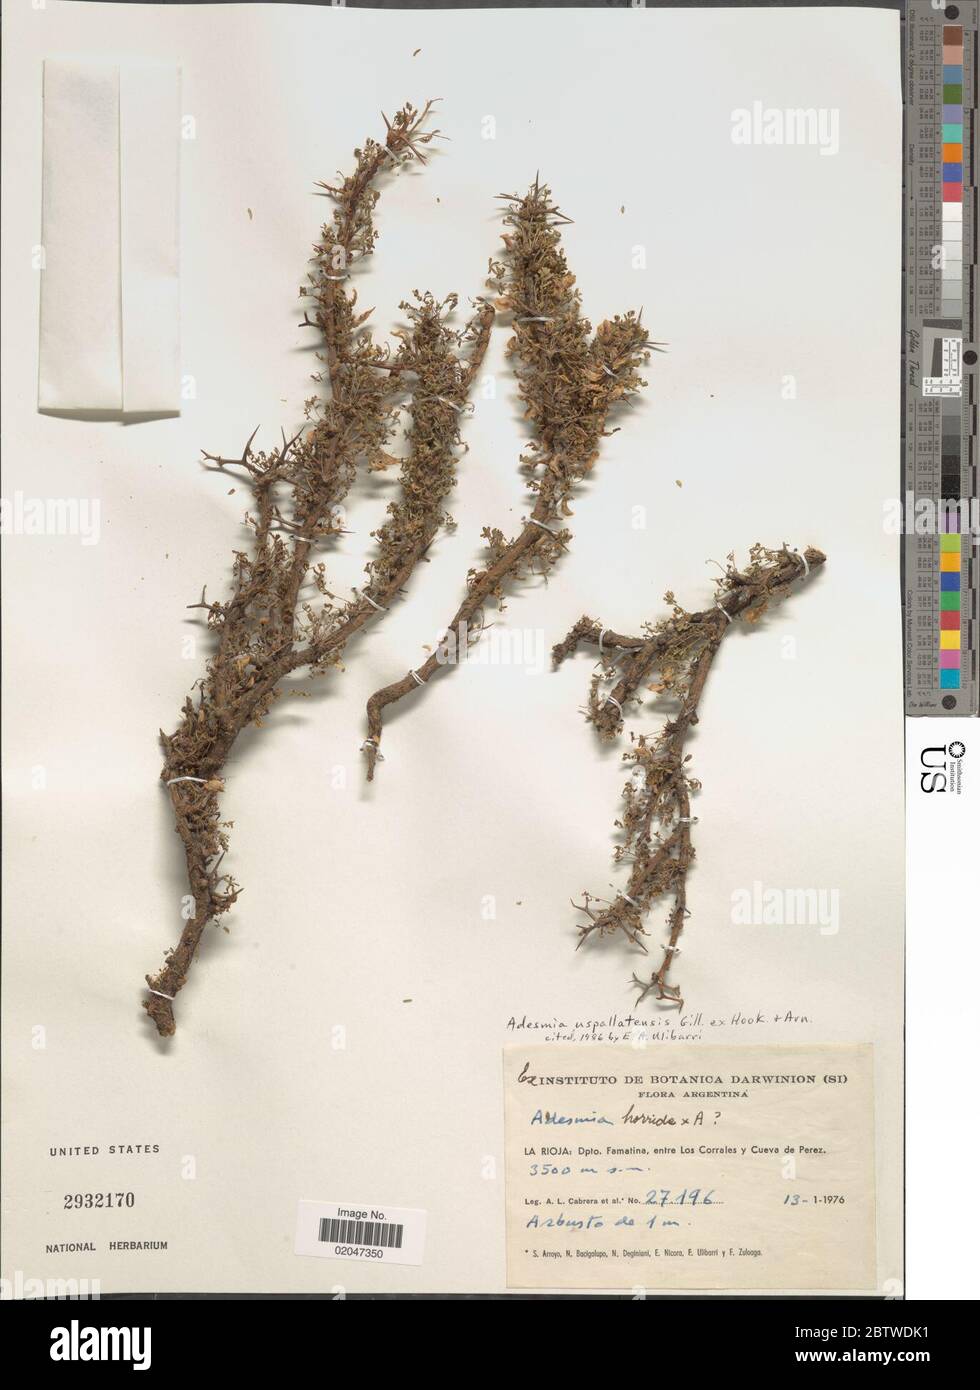 Adesmia uspallatensis Gillies ex Hook Arn. Stock Photo